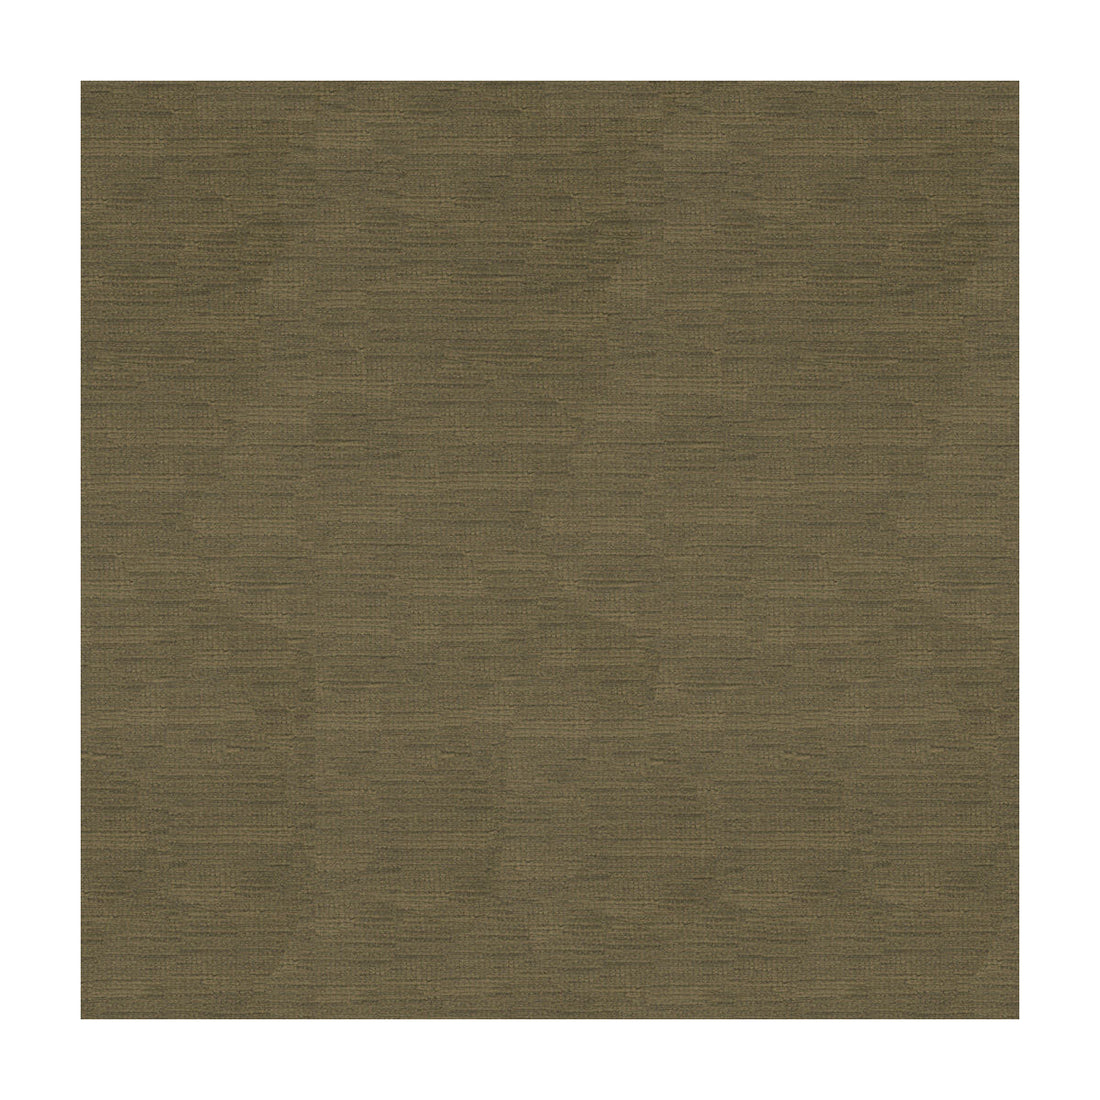 Lazare Velvet fabric in driftwood color - pattern 8016103.106.0 - by Brunschwig &amp; Fils